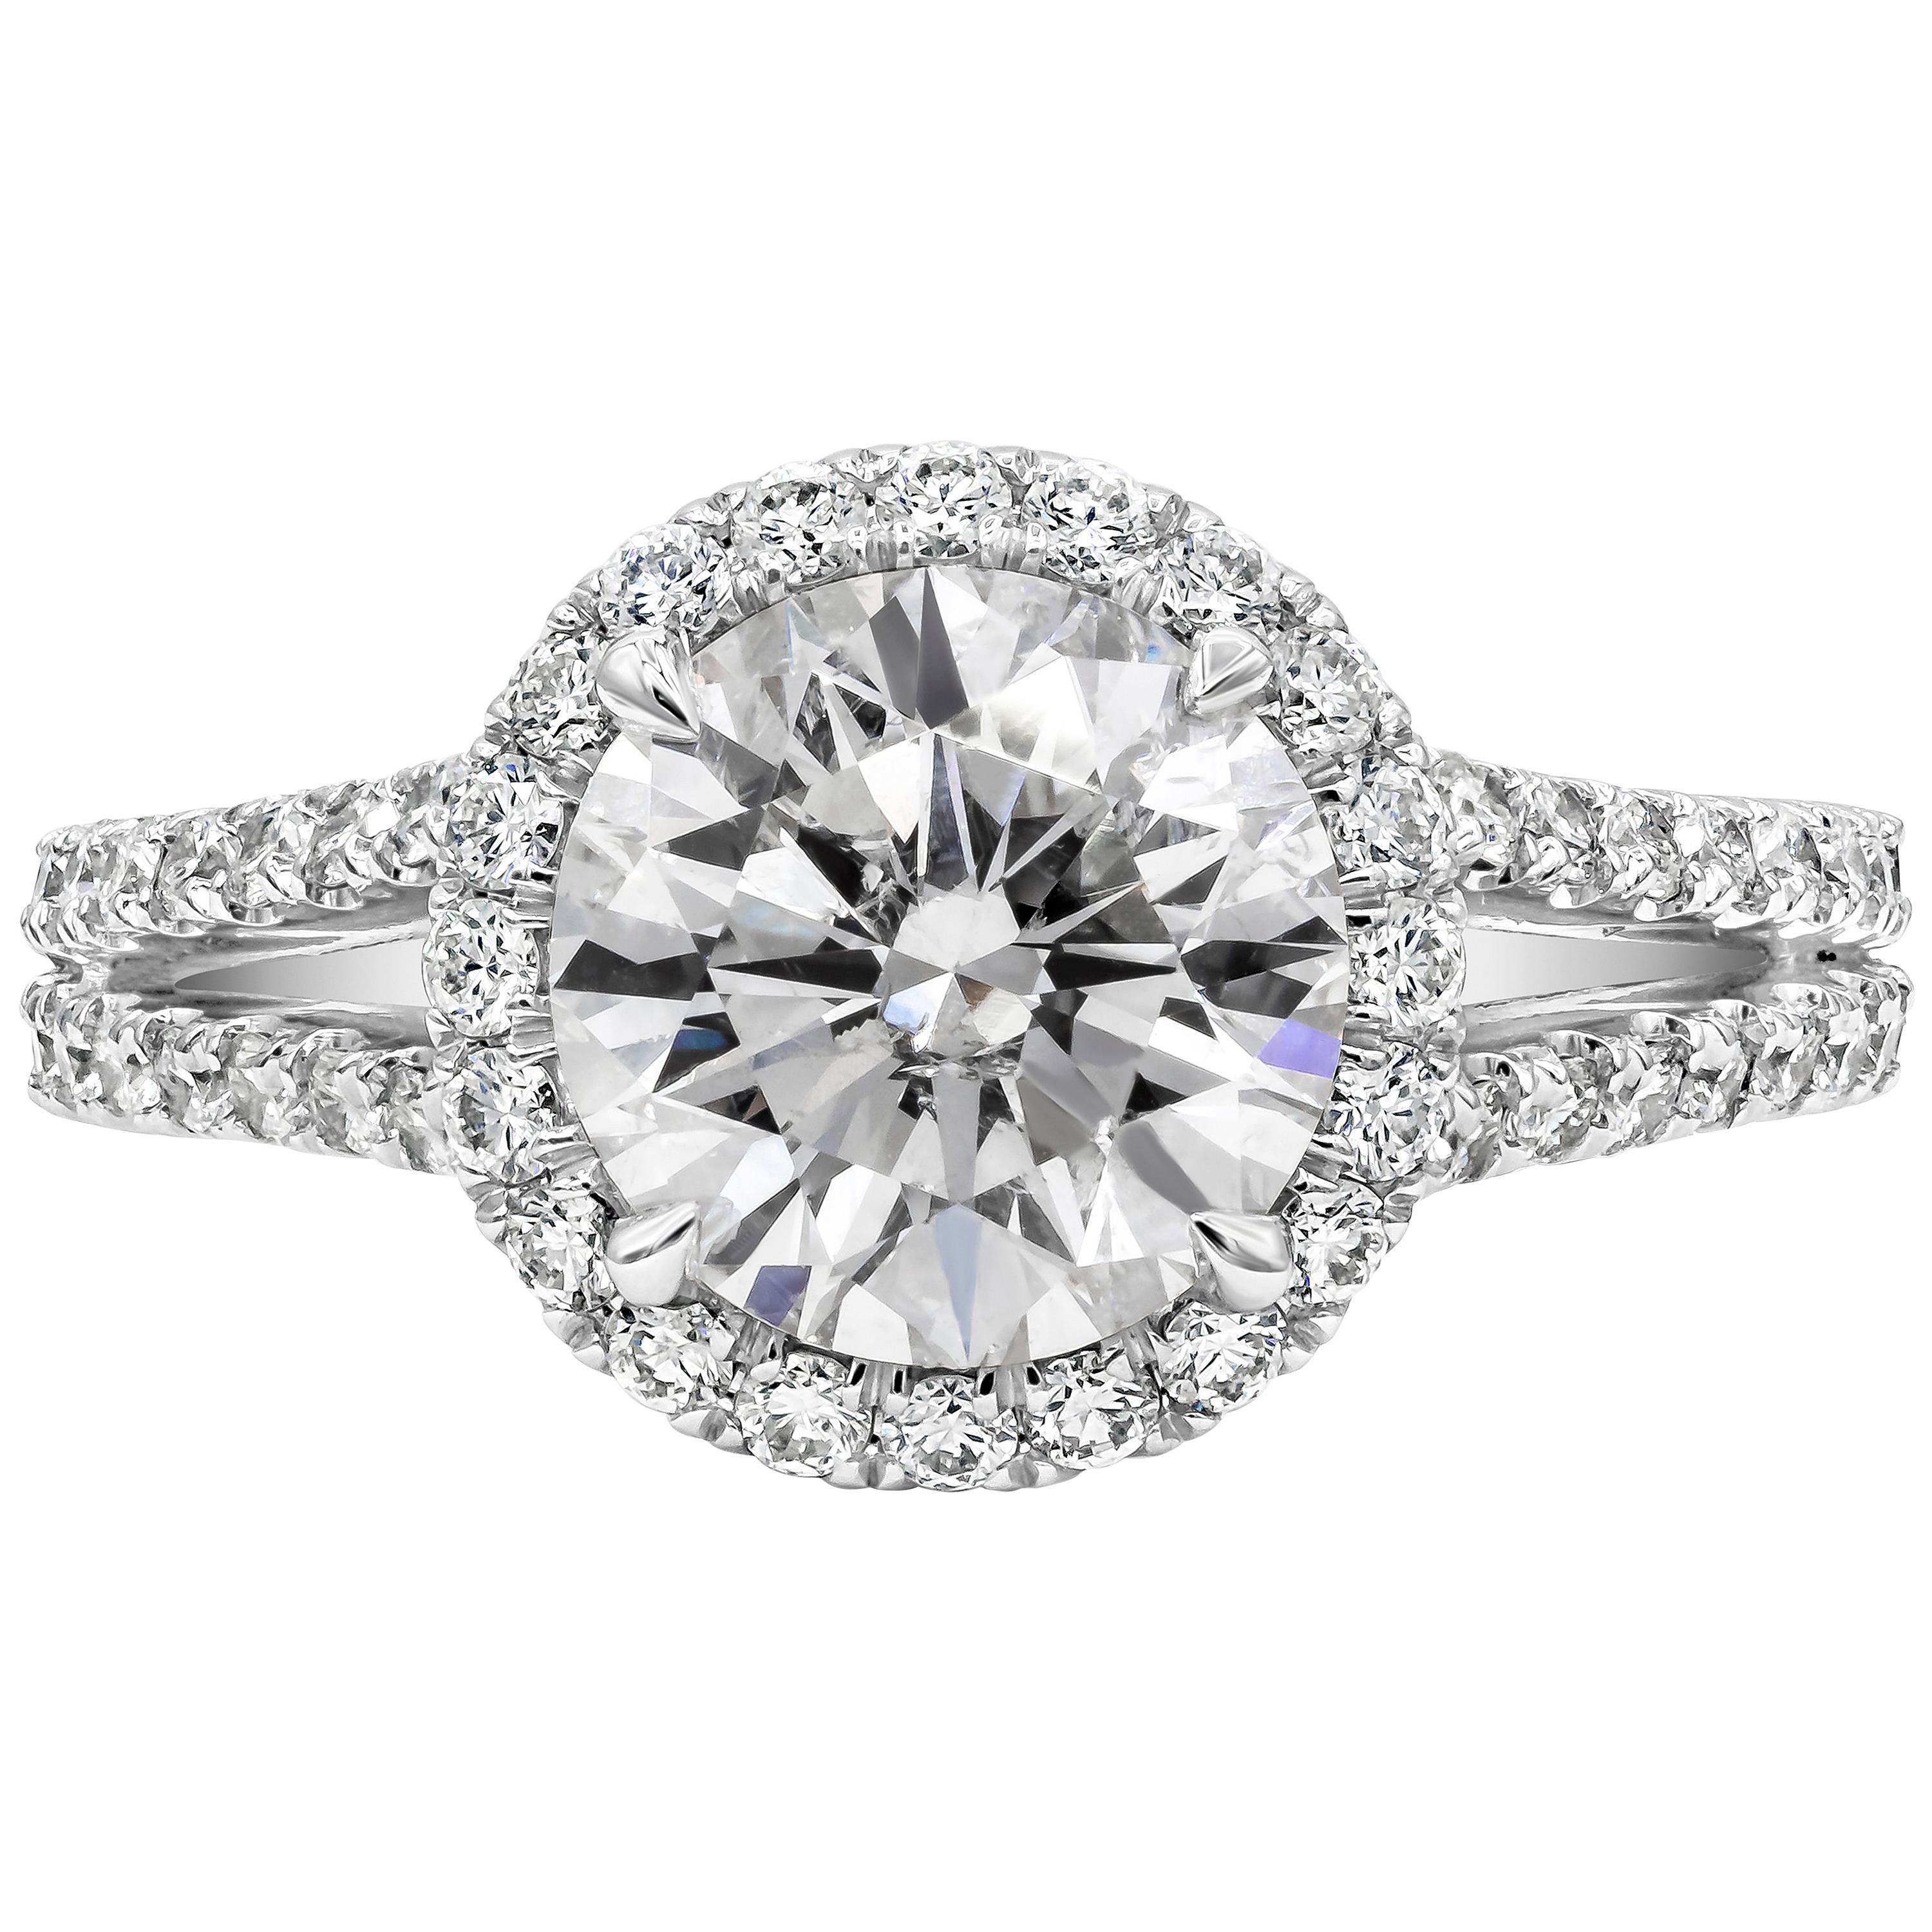 Roman Malakov GIA zertifiziert 2,24 Brillant Runde Diamant Halo Verlobungsring